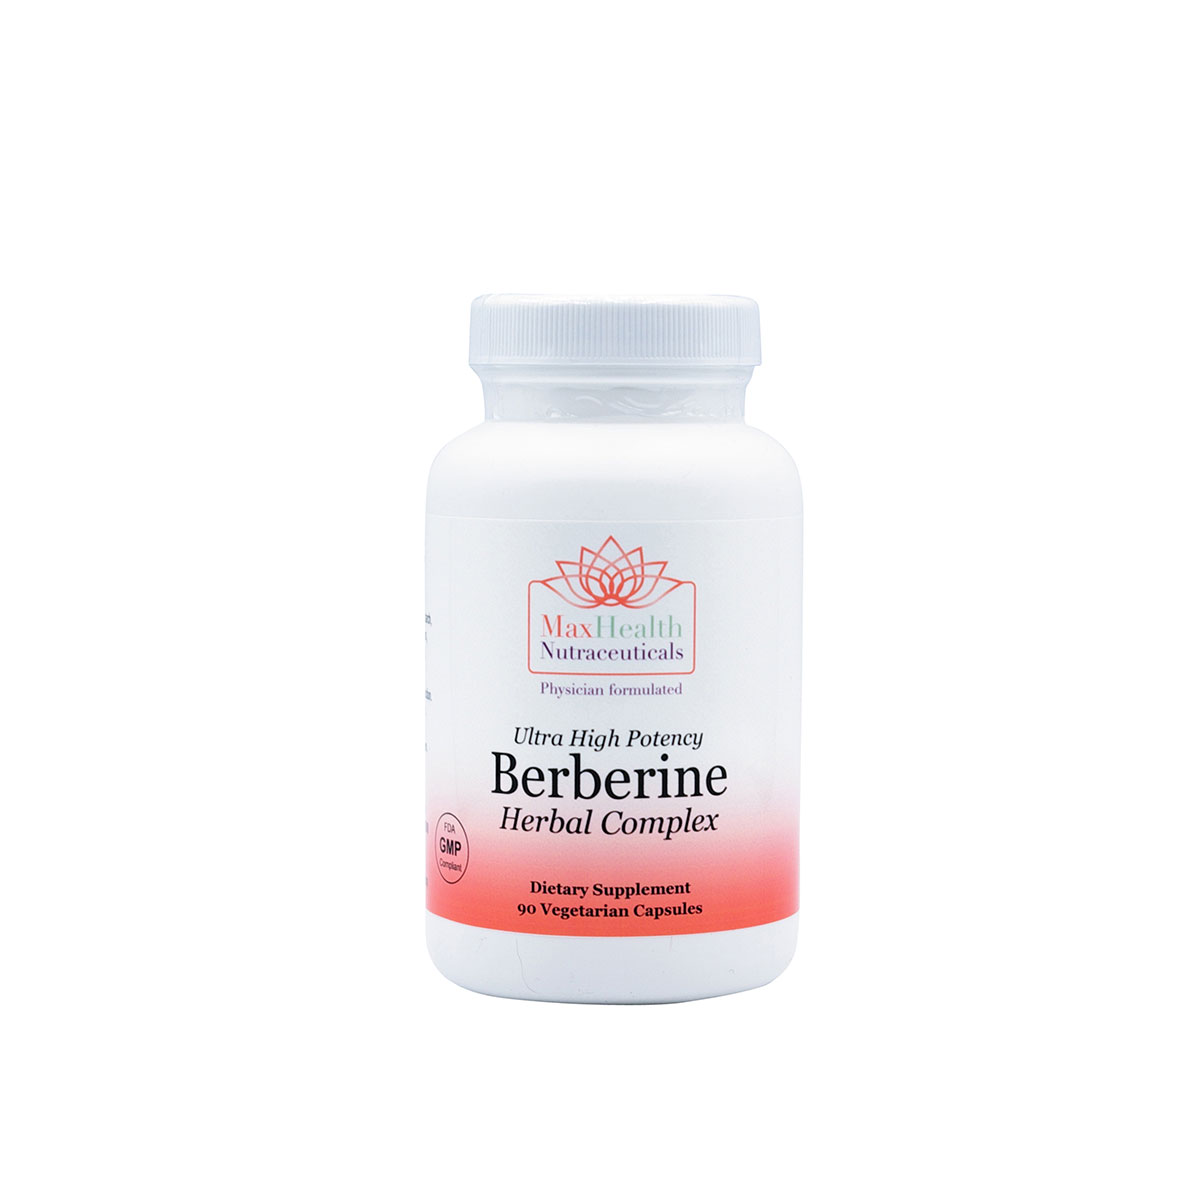 11Ultra High Potency Berberine Herbal Complex